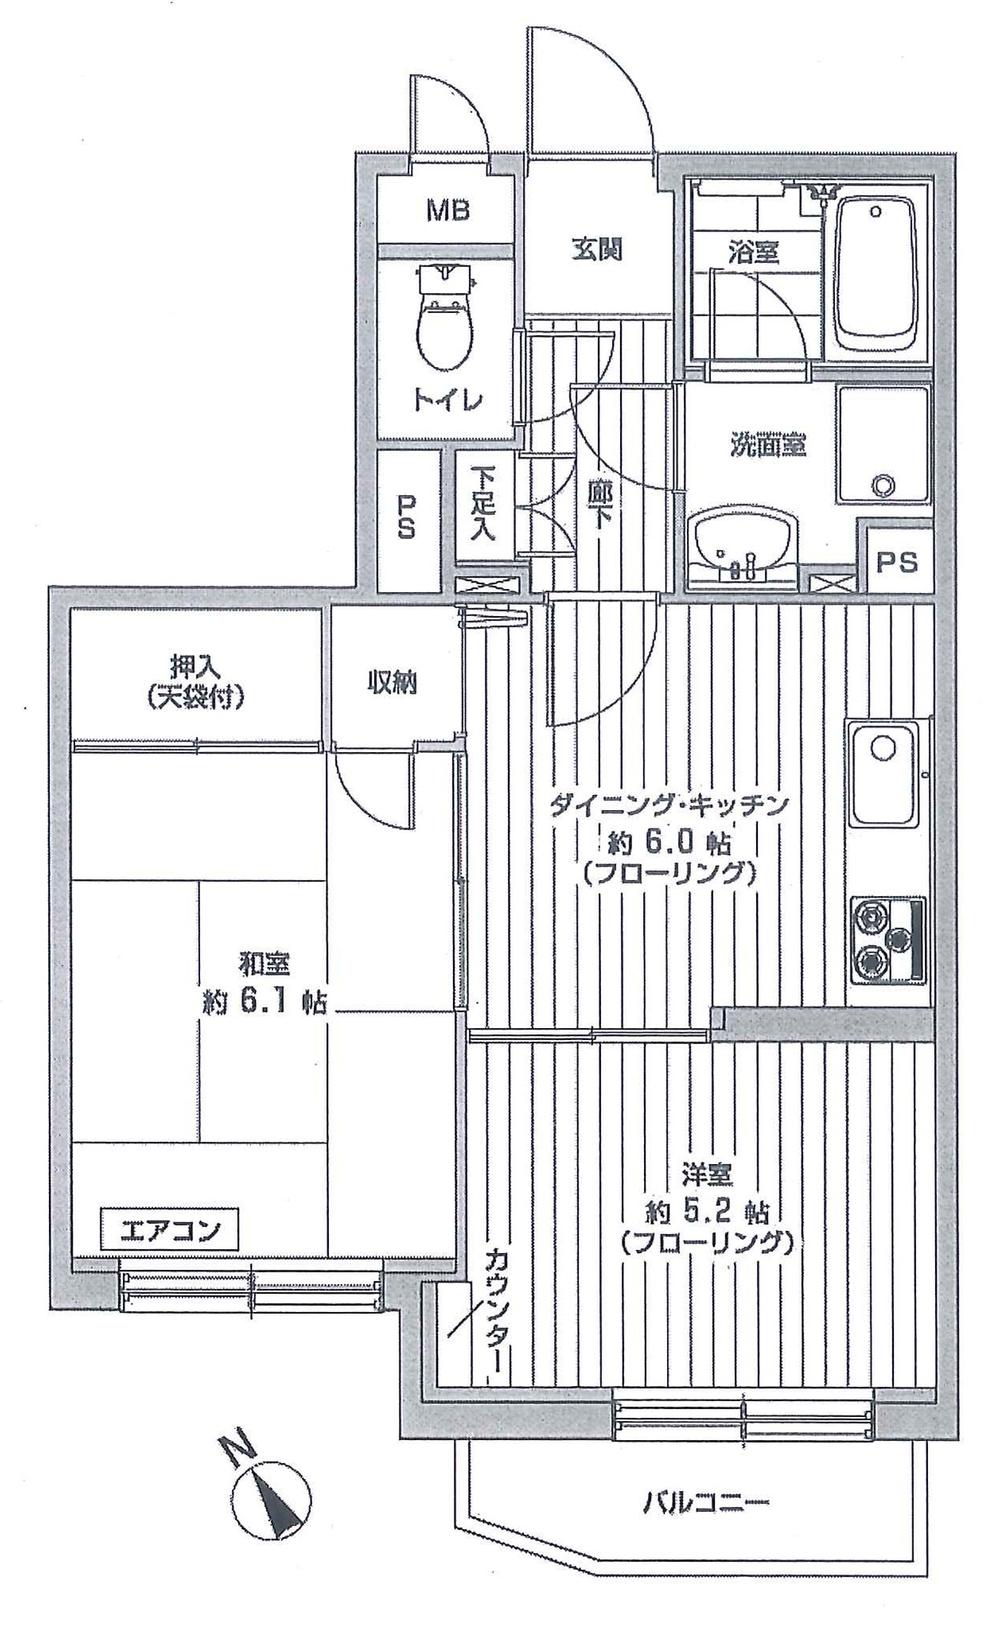 Floor plan. 2DK, Price 10.9 million yen, Occupied area 43.12 sq m , Balcony area 3.68 sq m 43 sq m more than 2DK